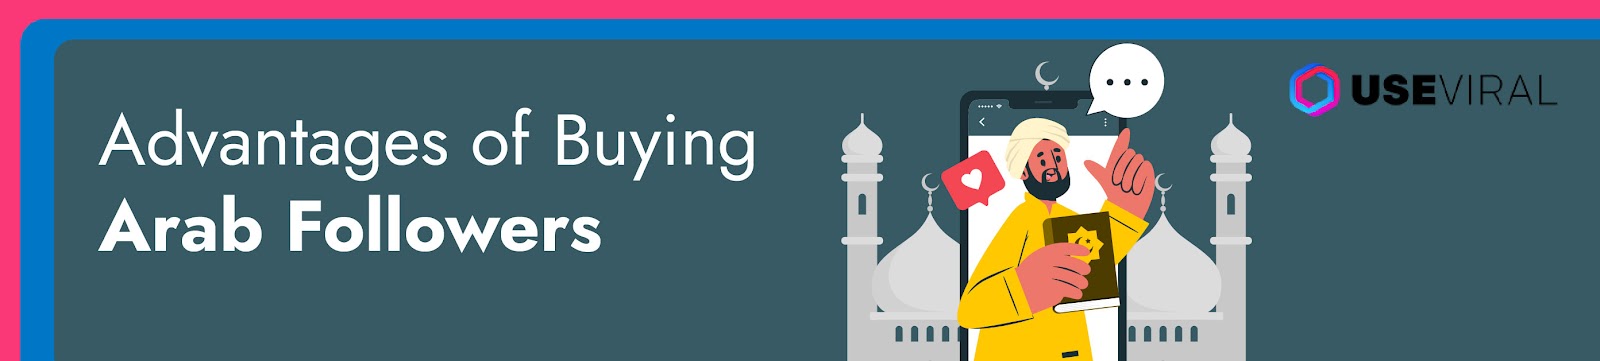 Advantages of Buying Arab Followers